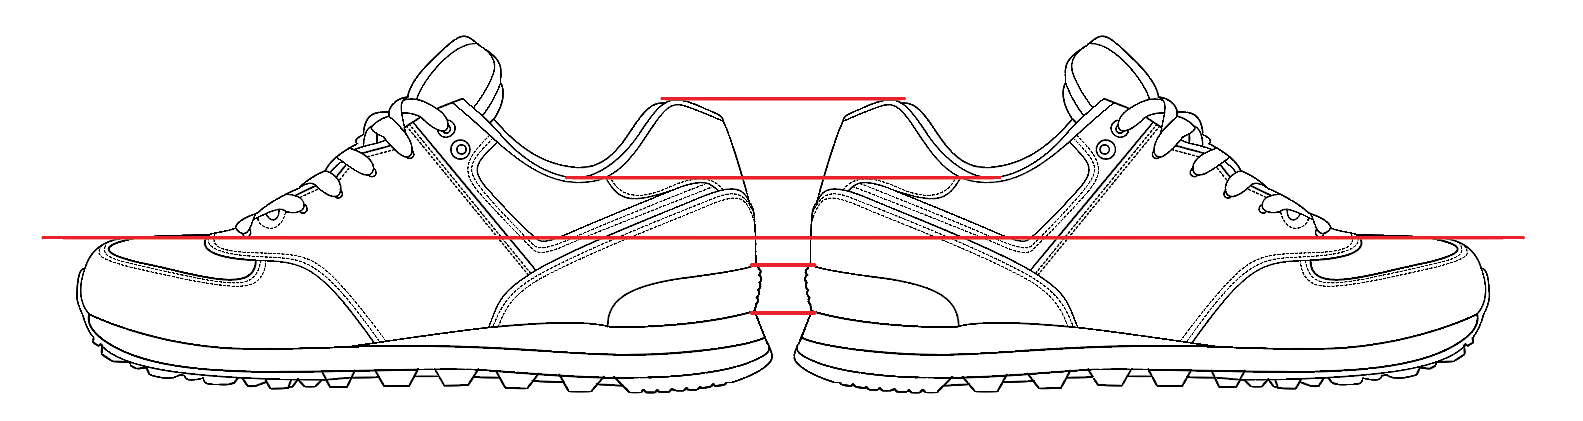 Shoe Anatomy: The Basics On Quality Footwear Construction